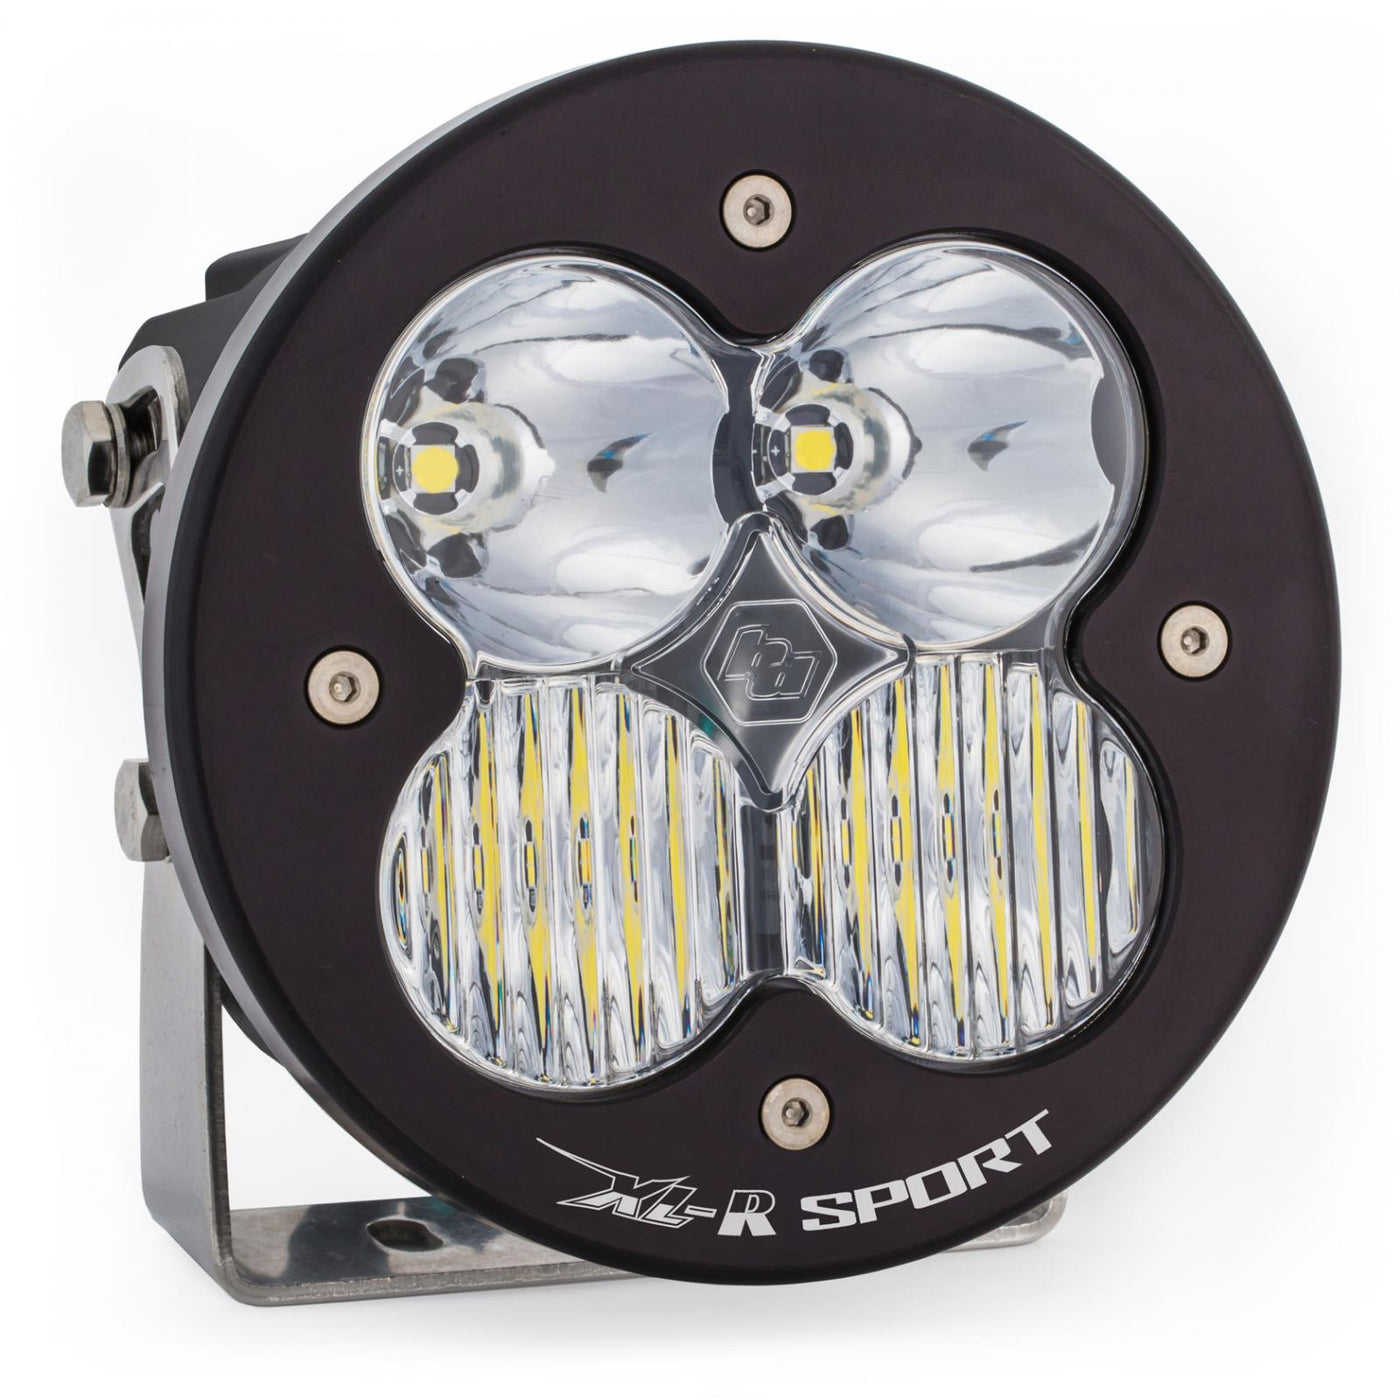 Baja Designs 570003 LED Light Pods Clear Lens Spot XL R Sport Driving/Combo